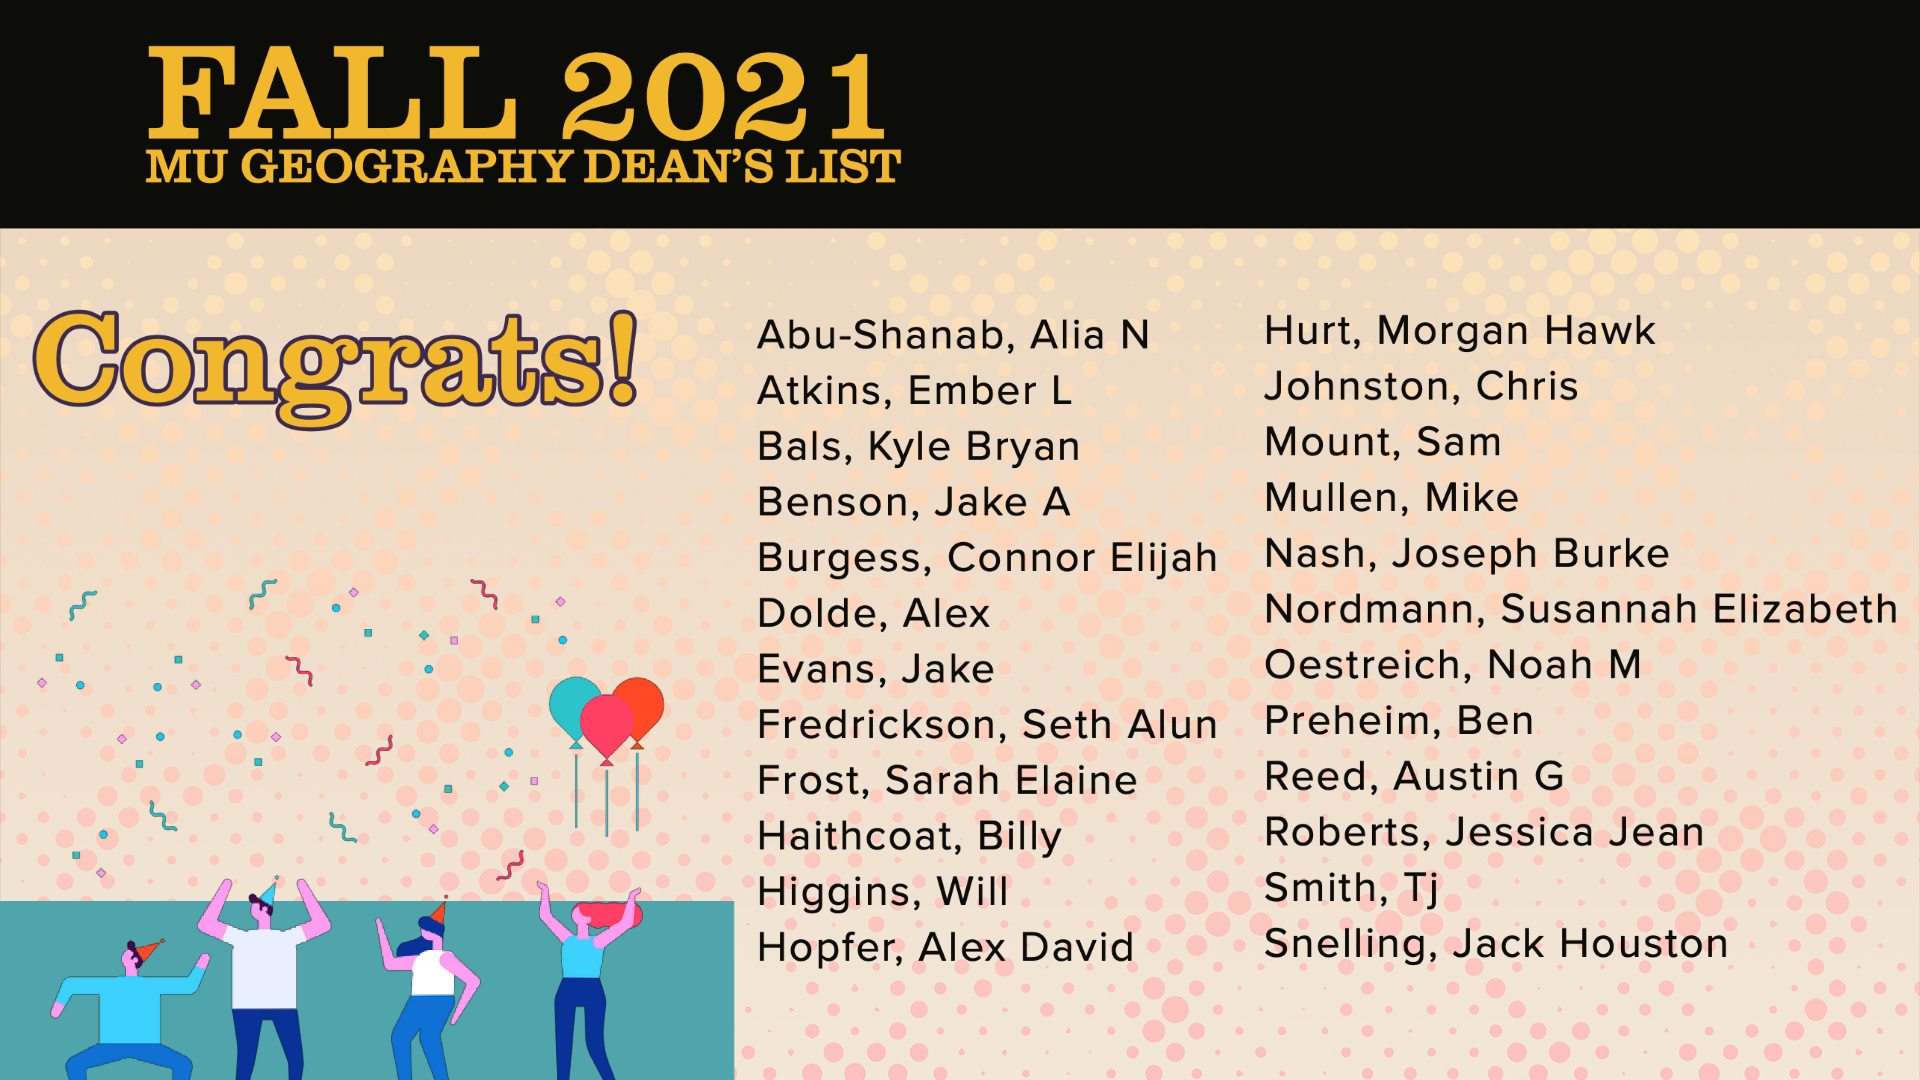 List of Dean's List recipients